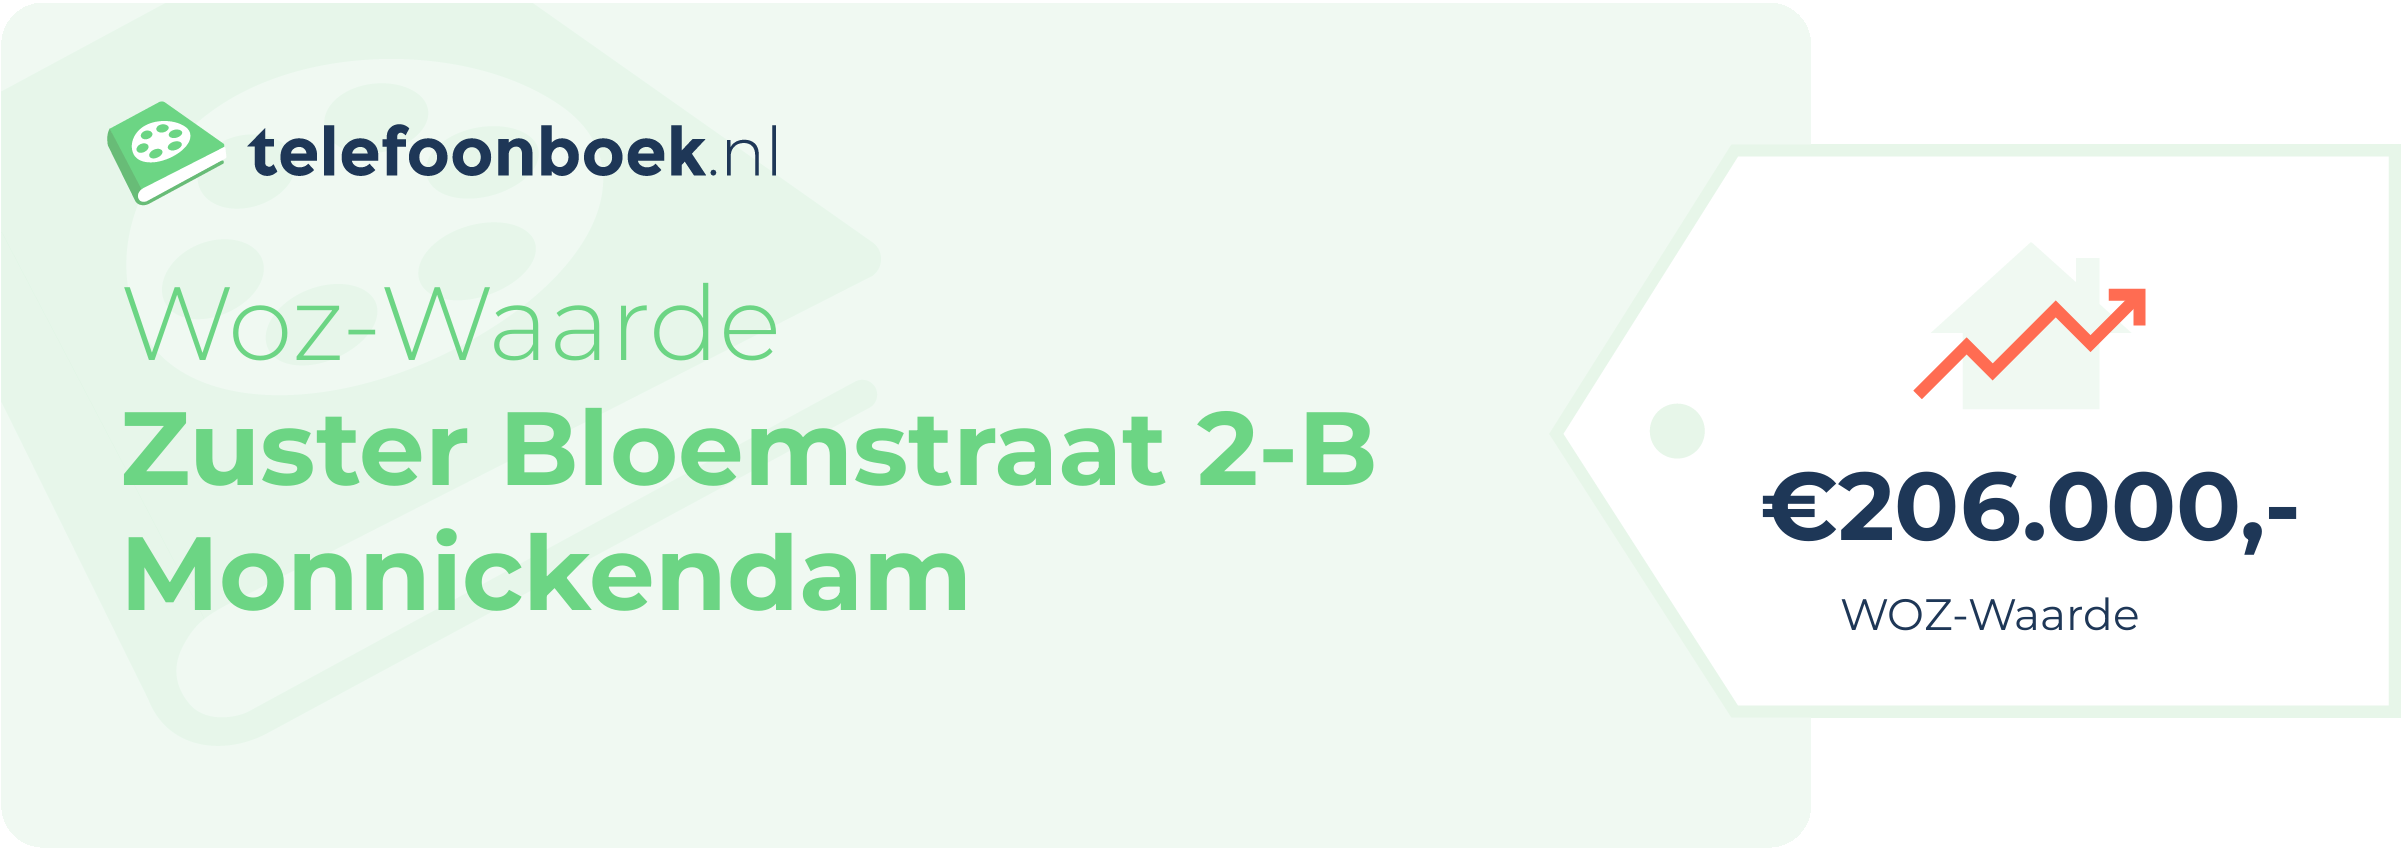 WOZ-waarde Zuster Bloemstraat 2-B Monnickendam